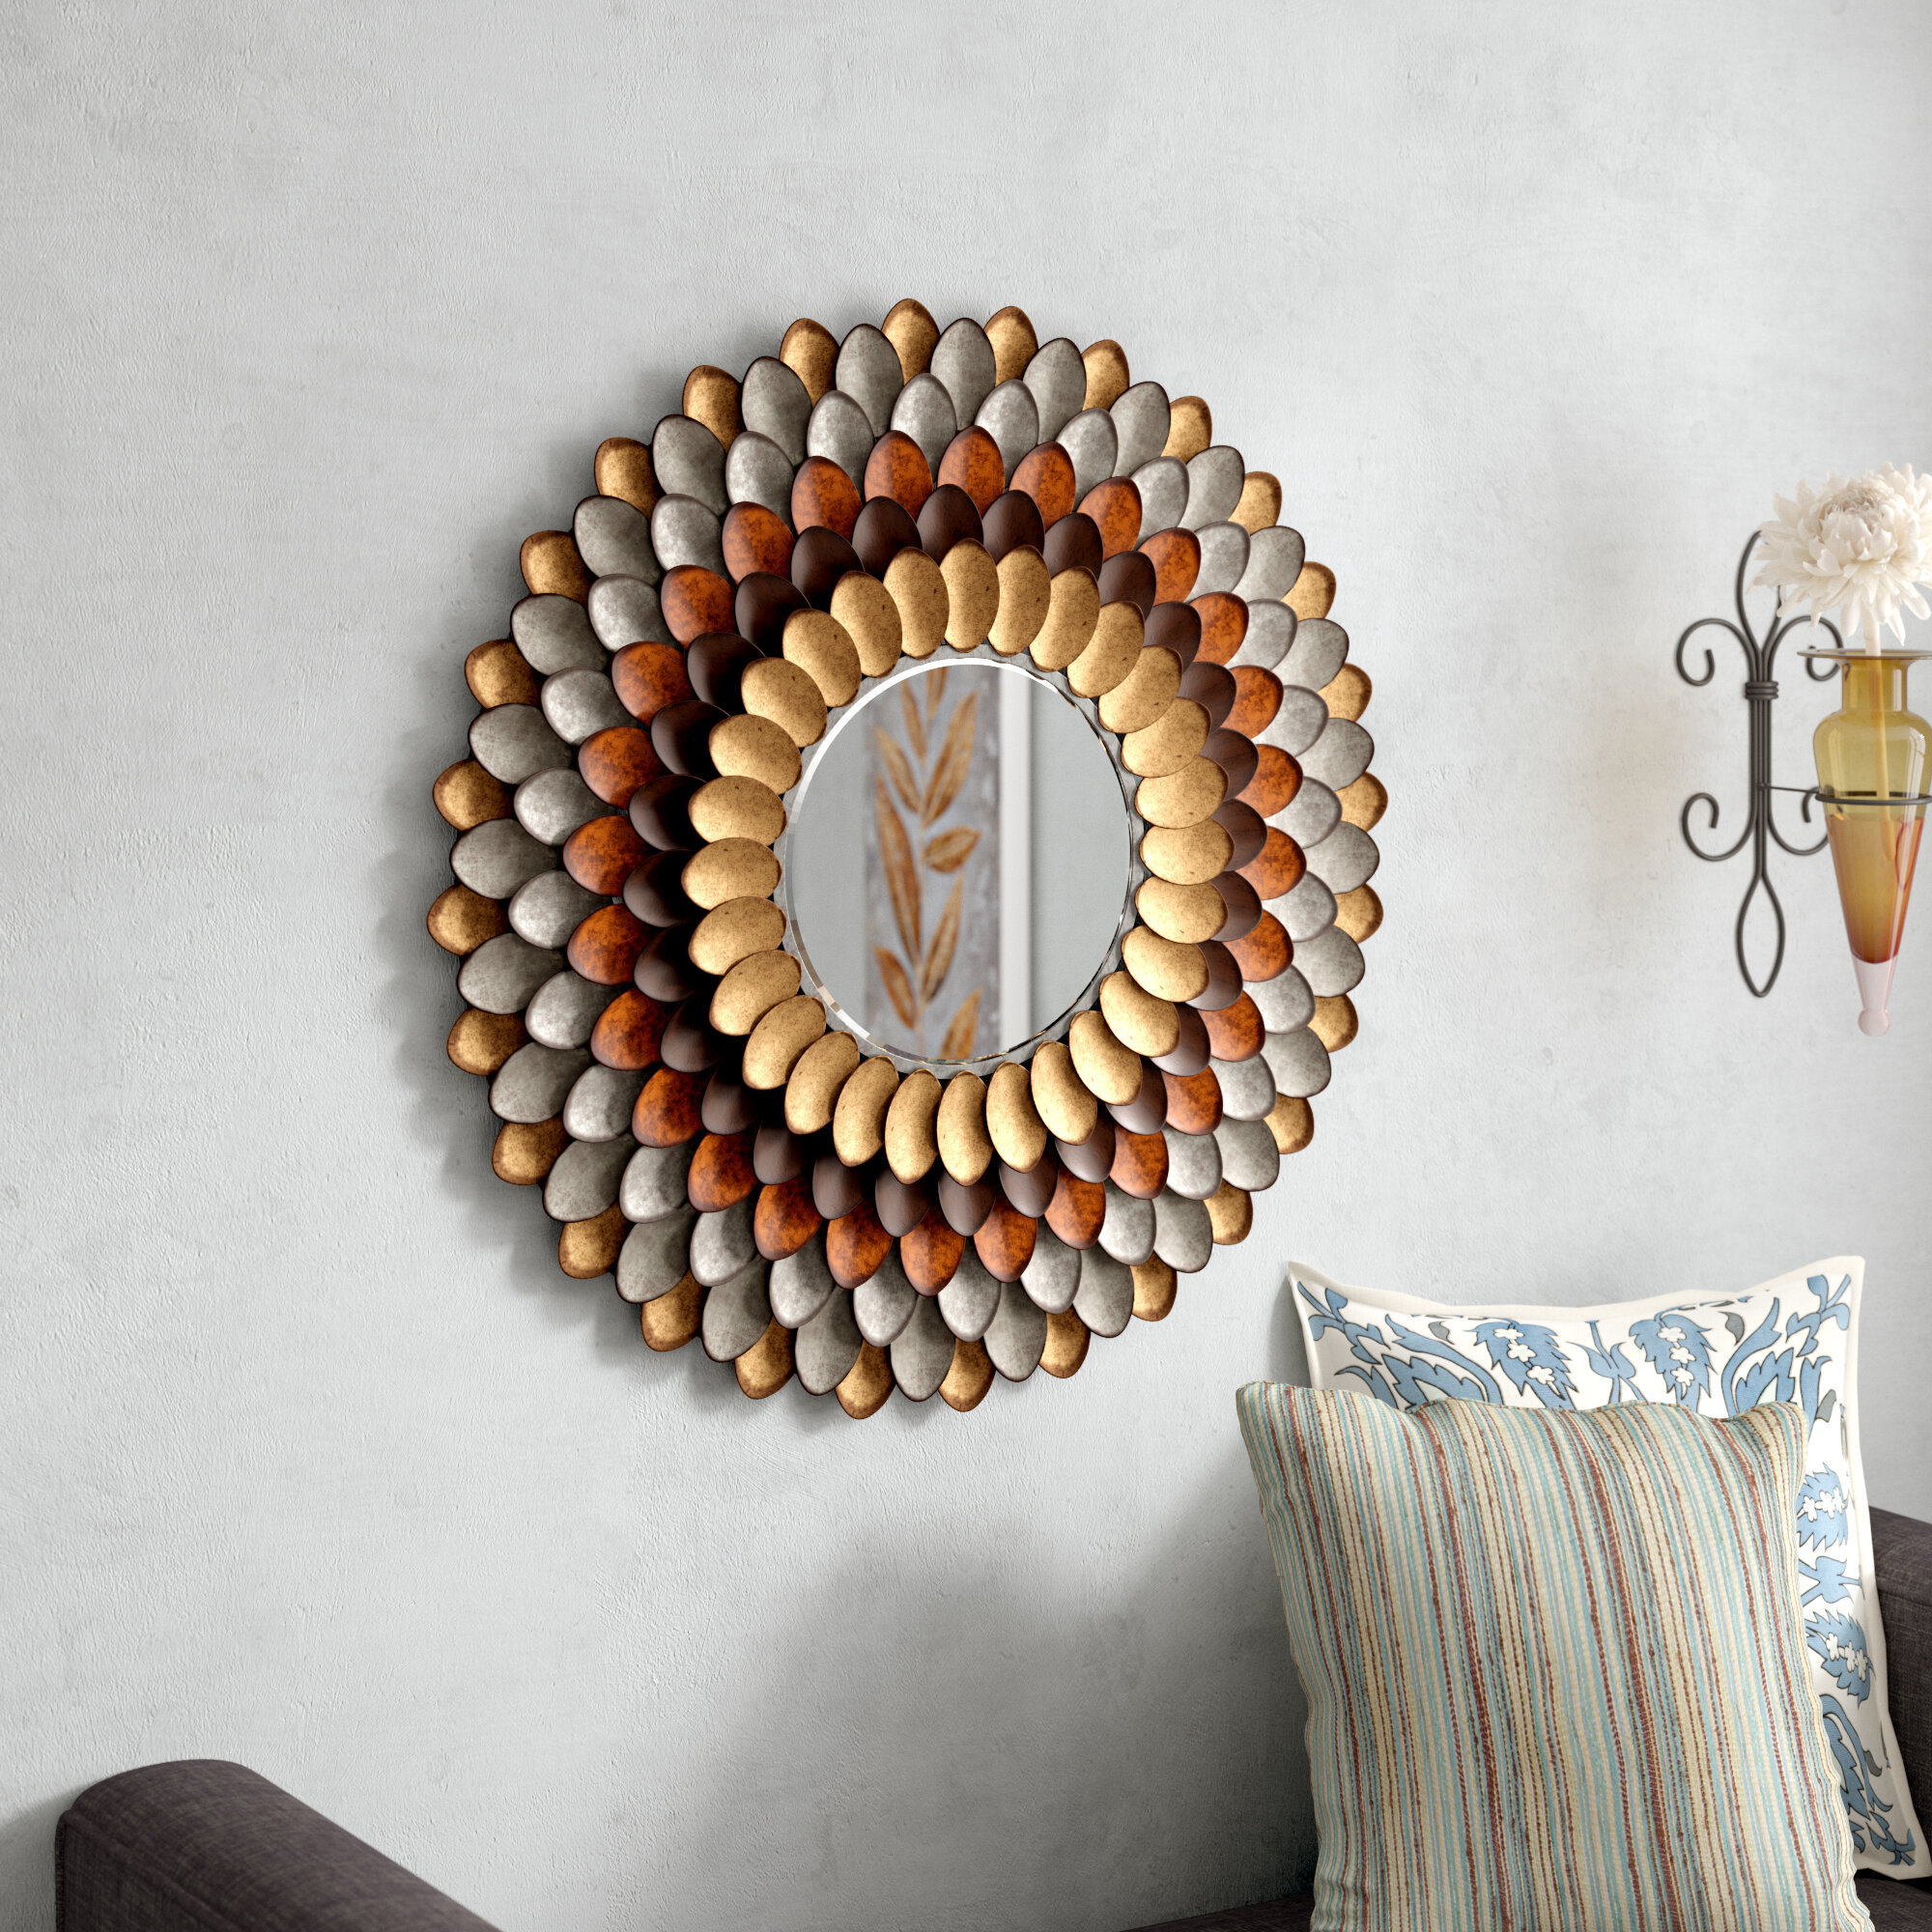 Red Barrel Studio Decorative Round Wall Mirror Reviews Wayfair Ca